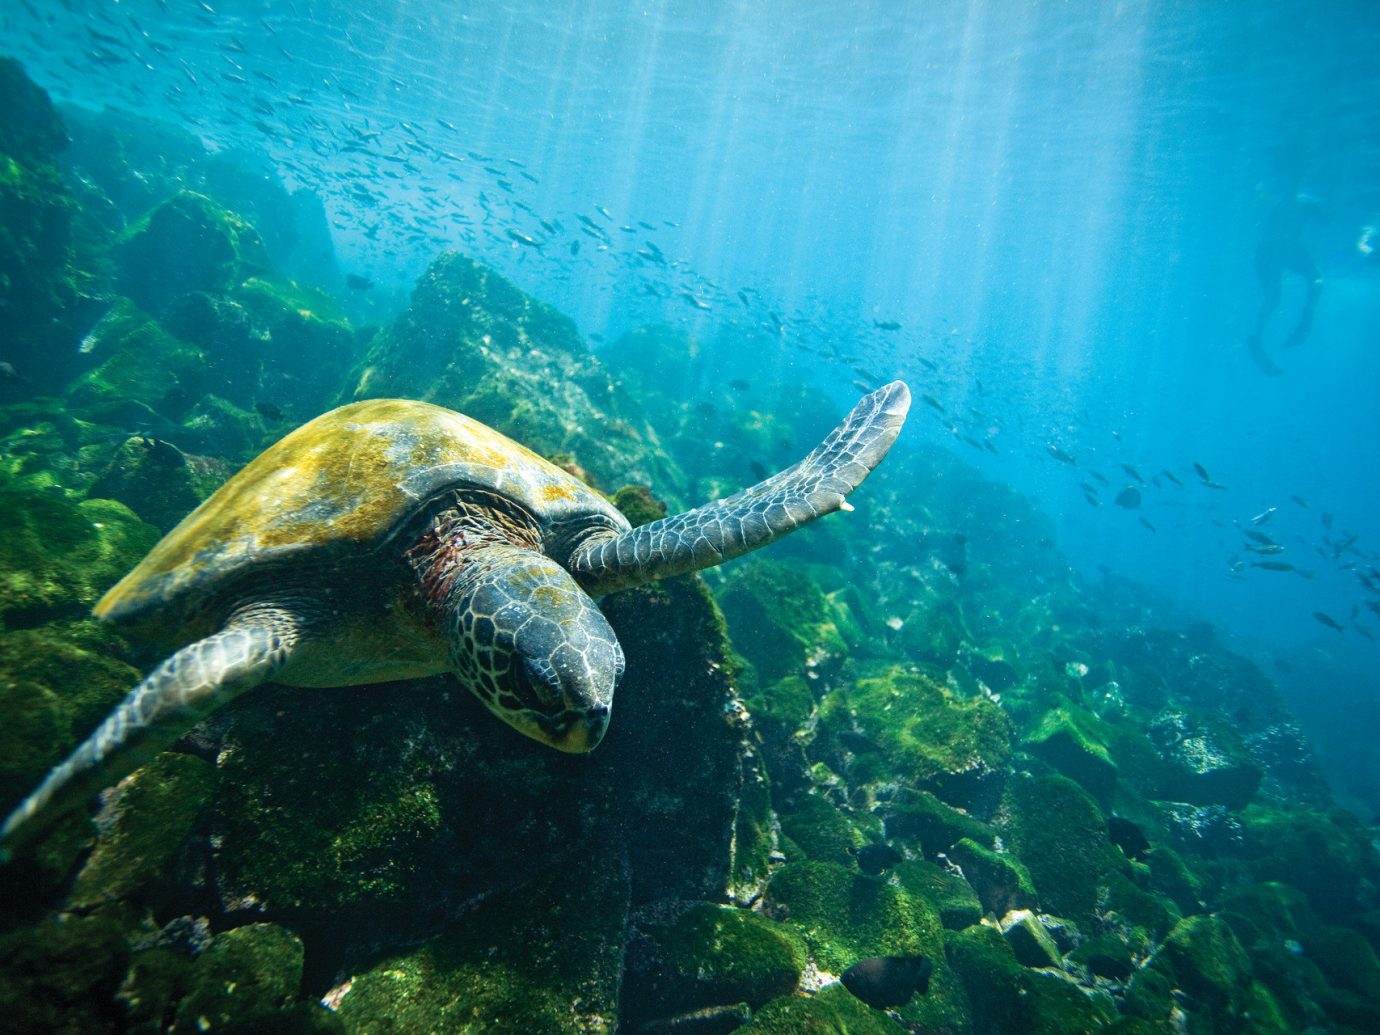 National Parks Trip Ideas outdoor reptile turtle animal marine biology underwater biology sea turtle Sea loggerhead coral reef